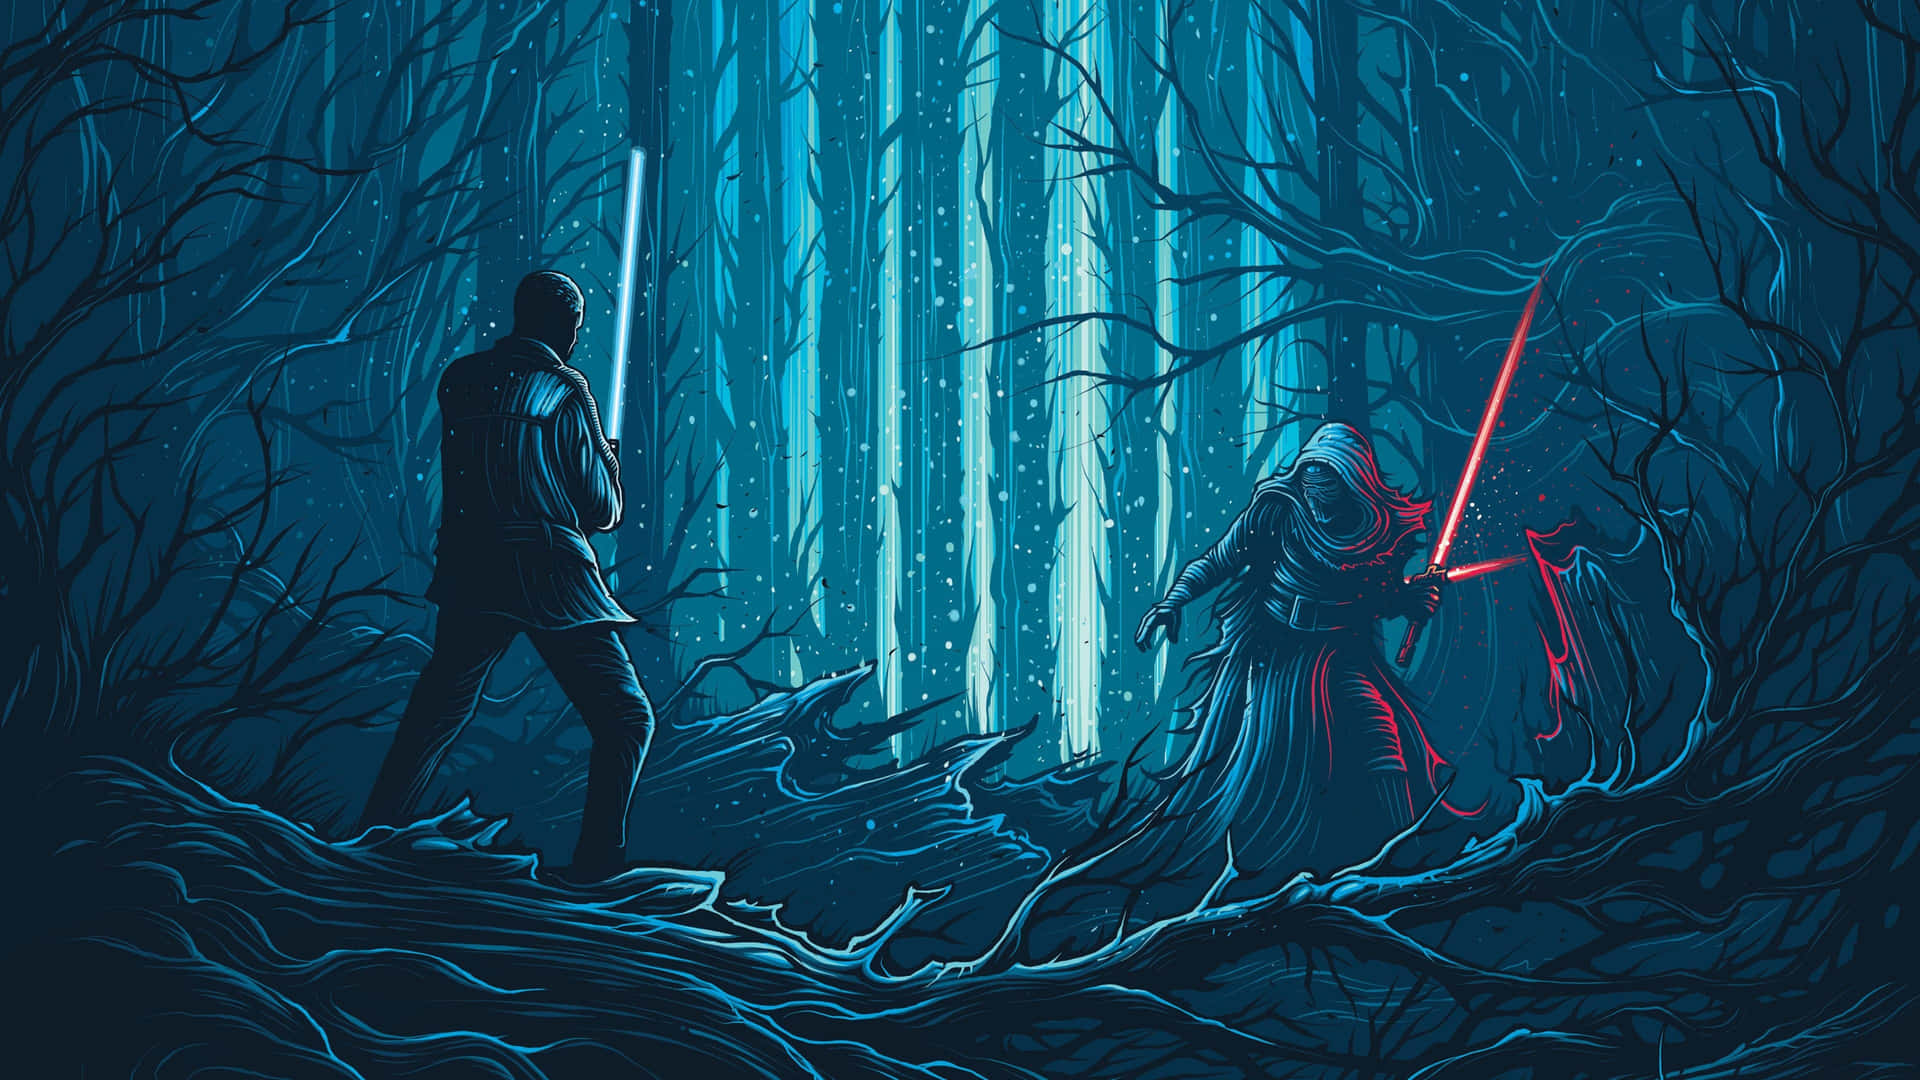 Star Wars Forest Duel Ultra Wide Wallpaper